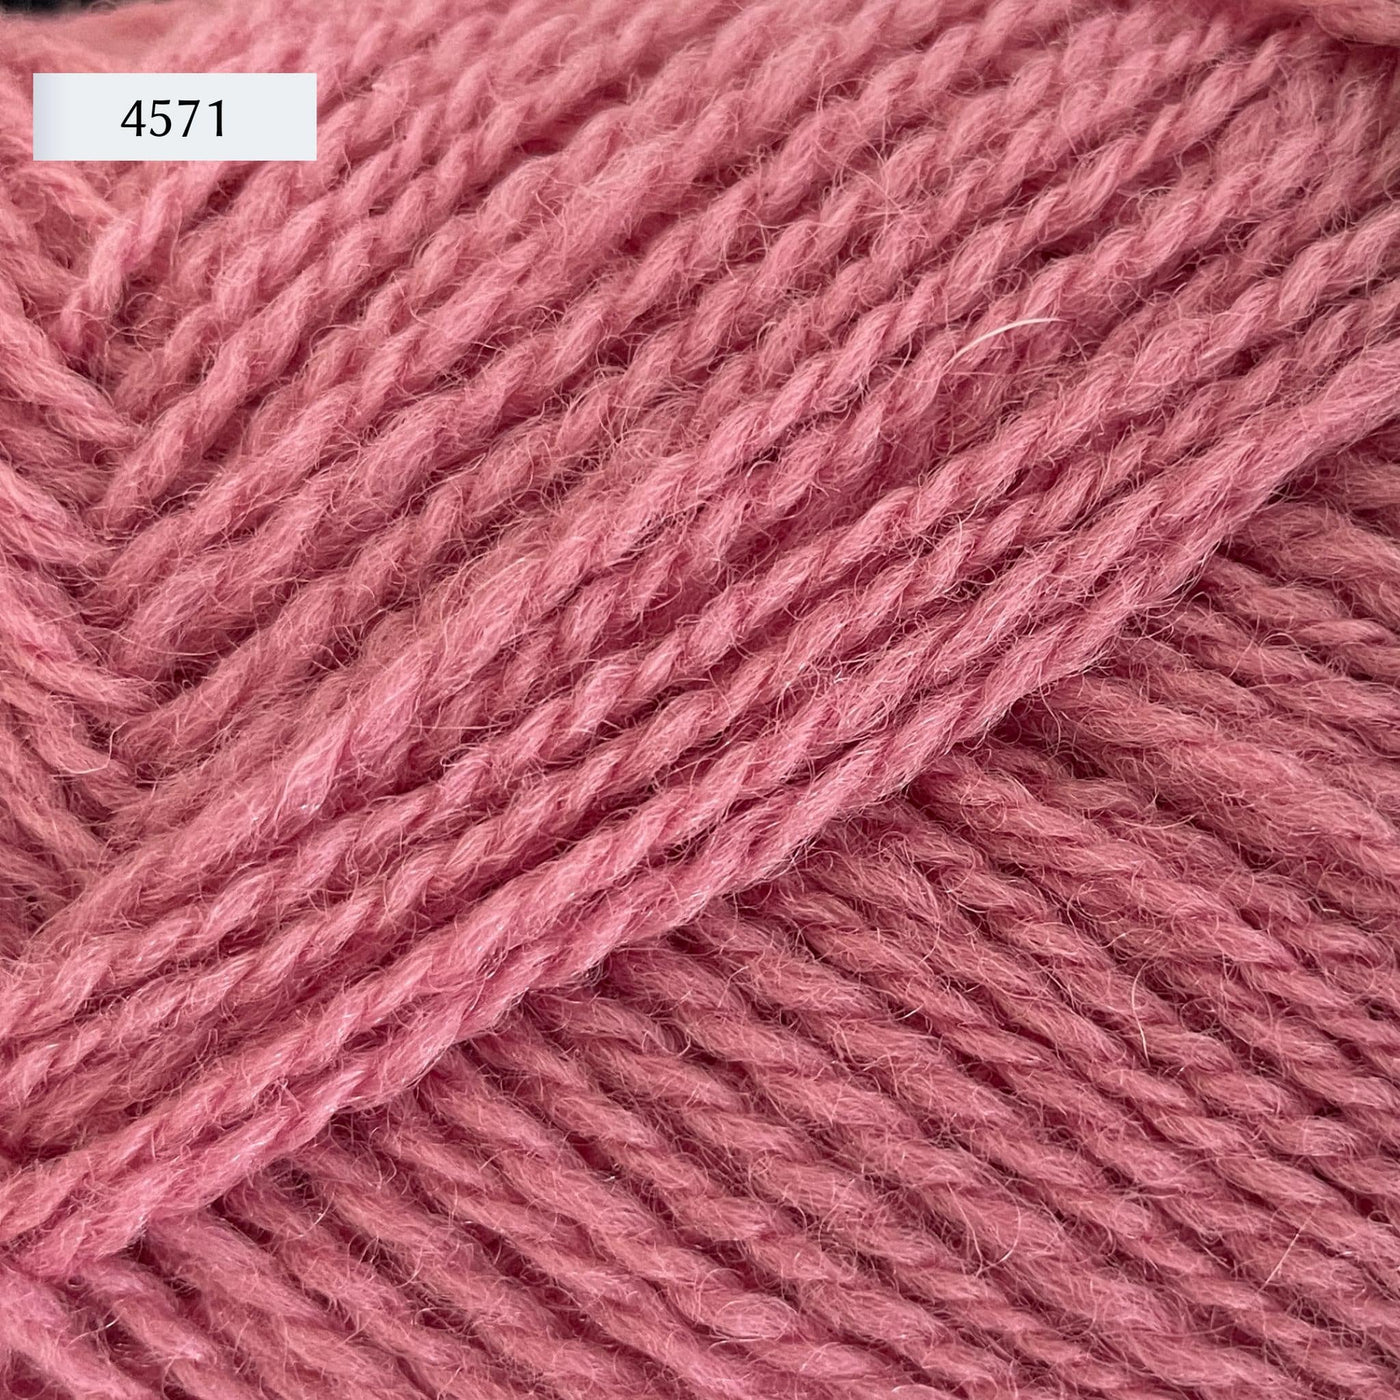 Rauma Finullgarn, a fingering/sport weight yarn, in color 4571, light bubblegum pink